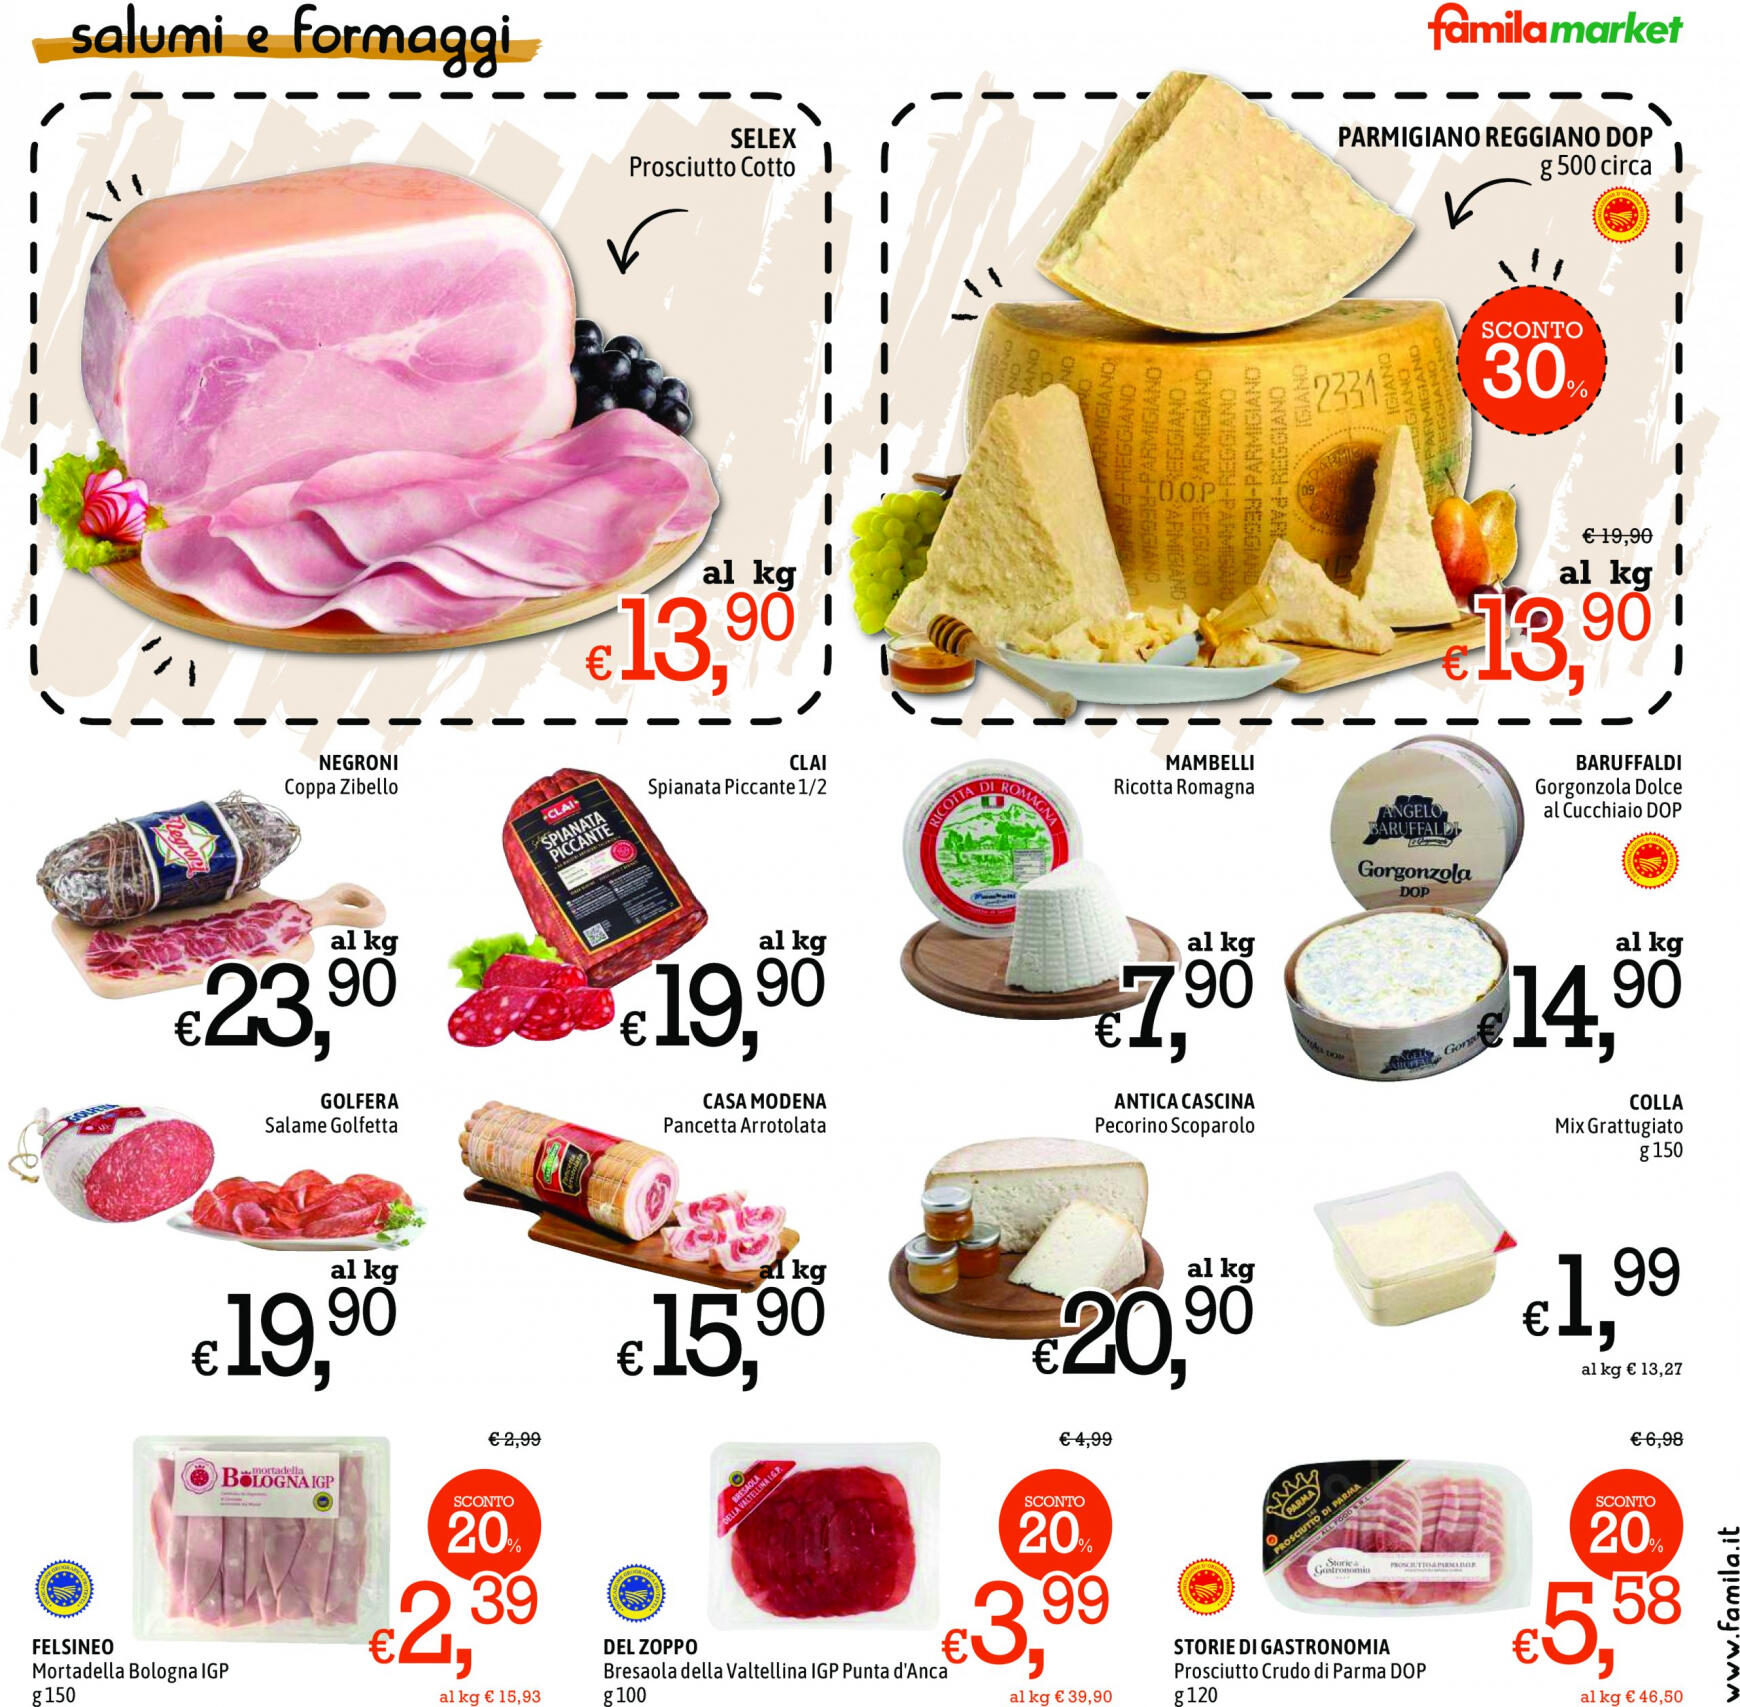 famila - Nuovo volantino Famila market 09.05. - 22.05. - page: 5